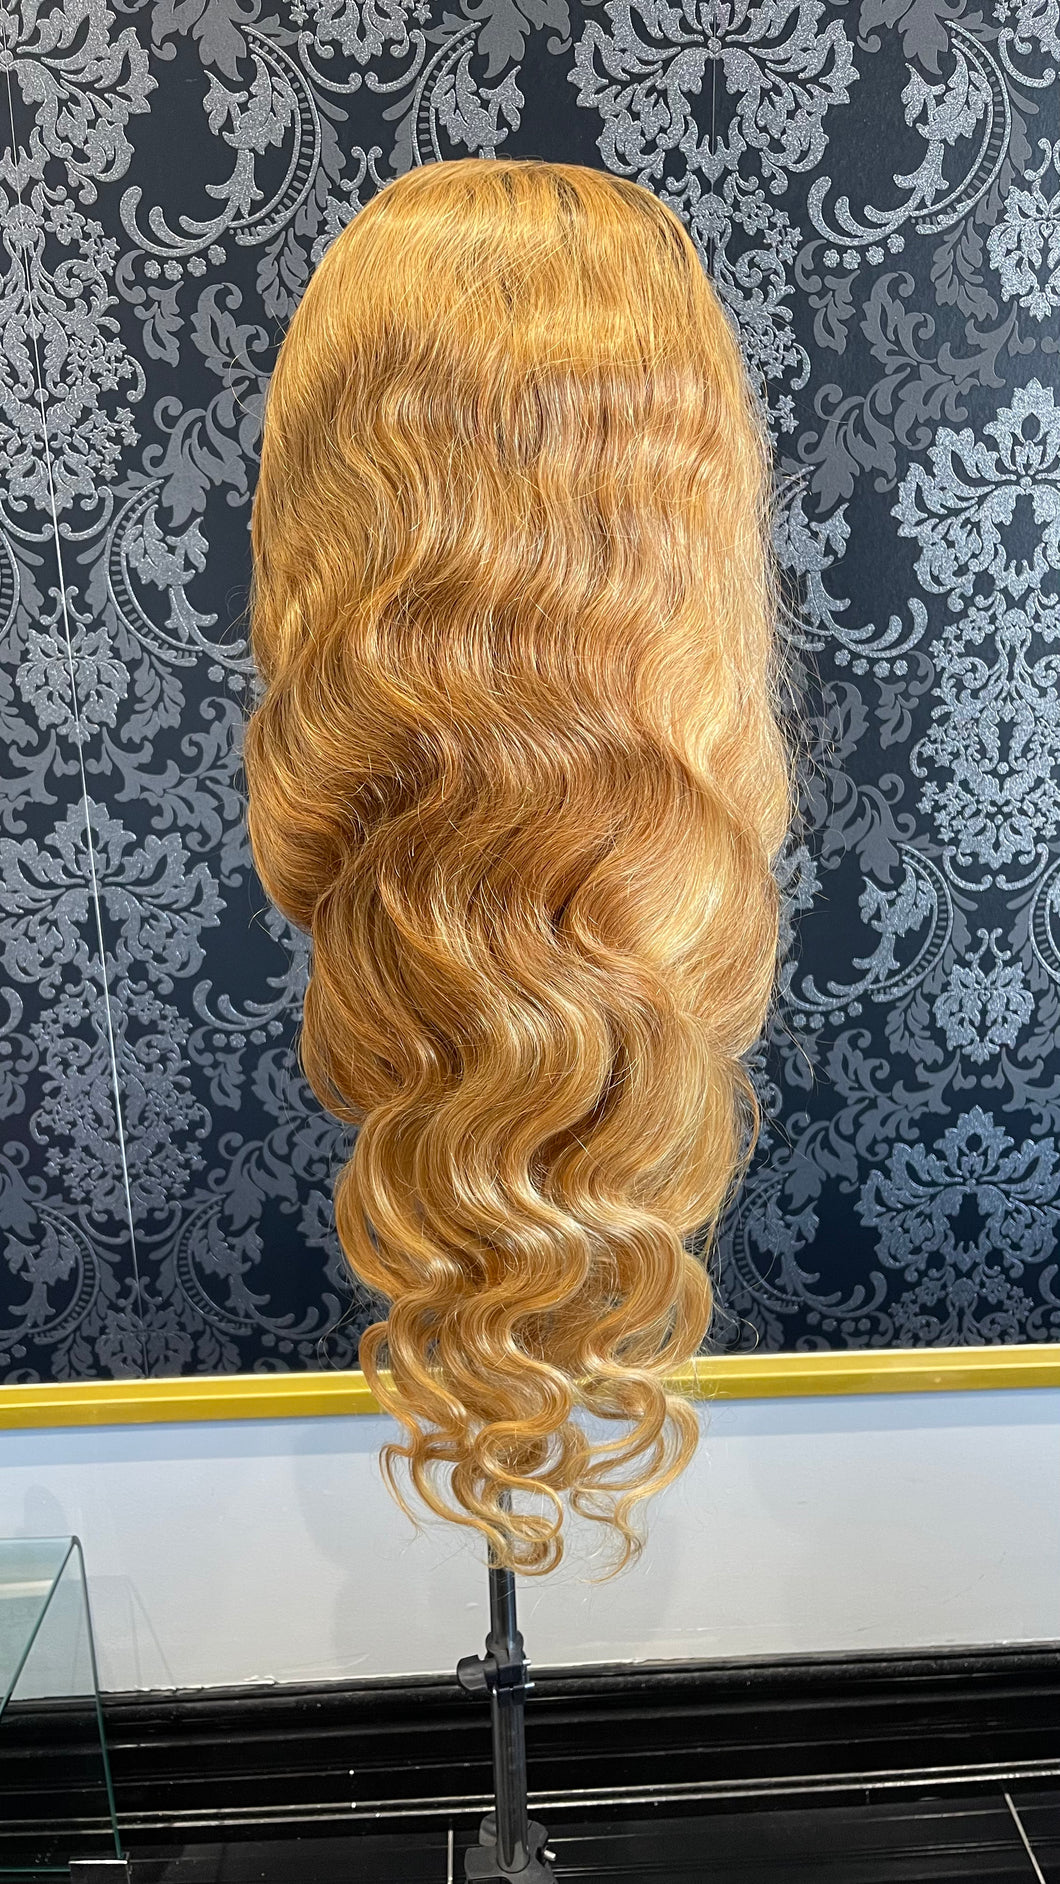 ESSTIQ HD Luxury Lace Front Wig - Honey Blonde Body Wave 13x6